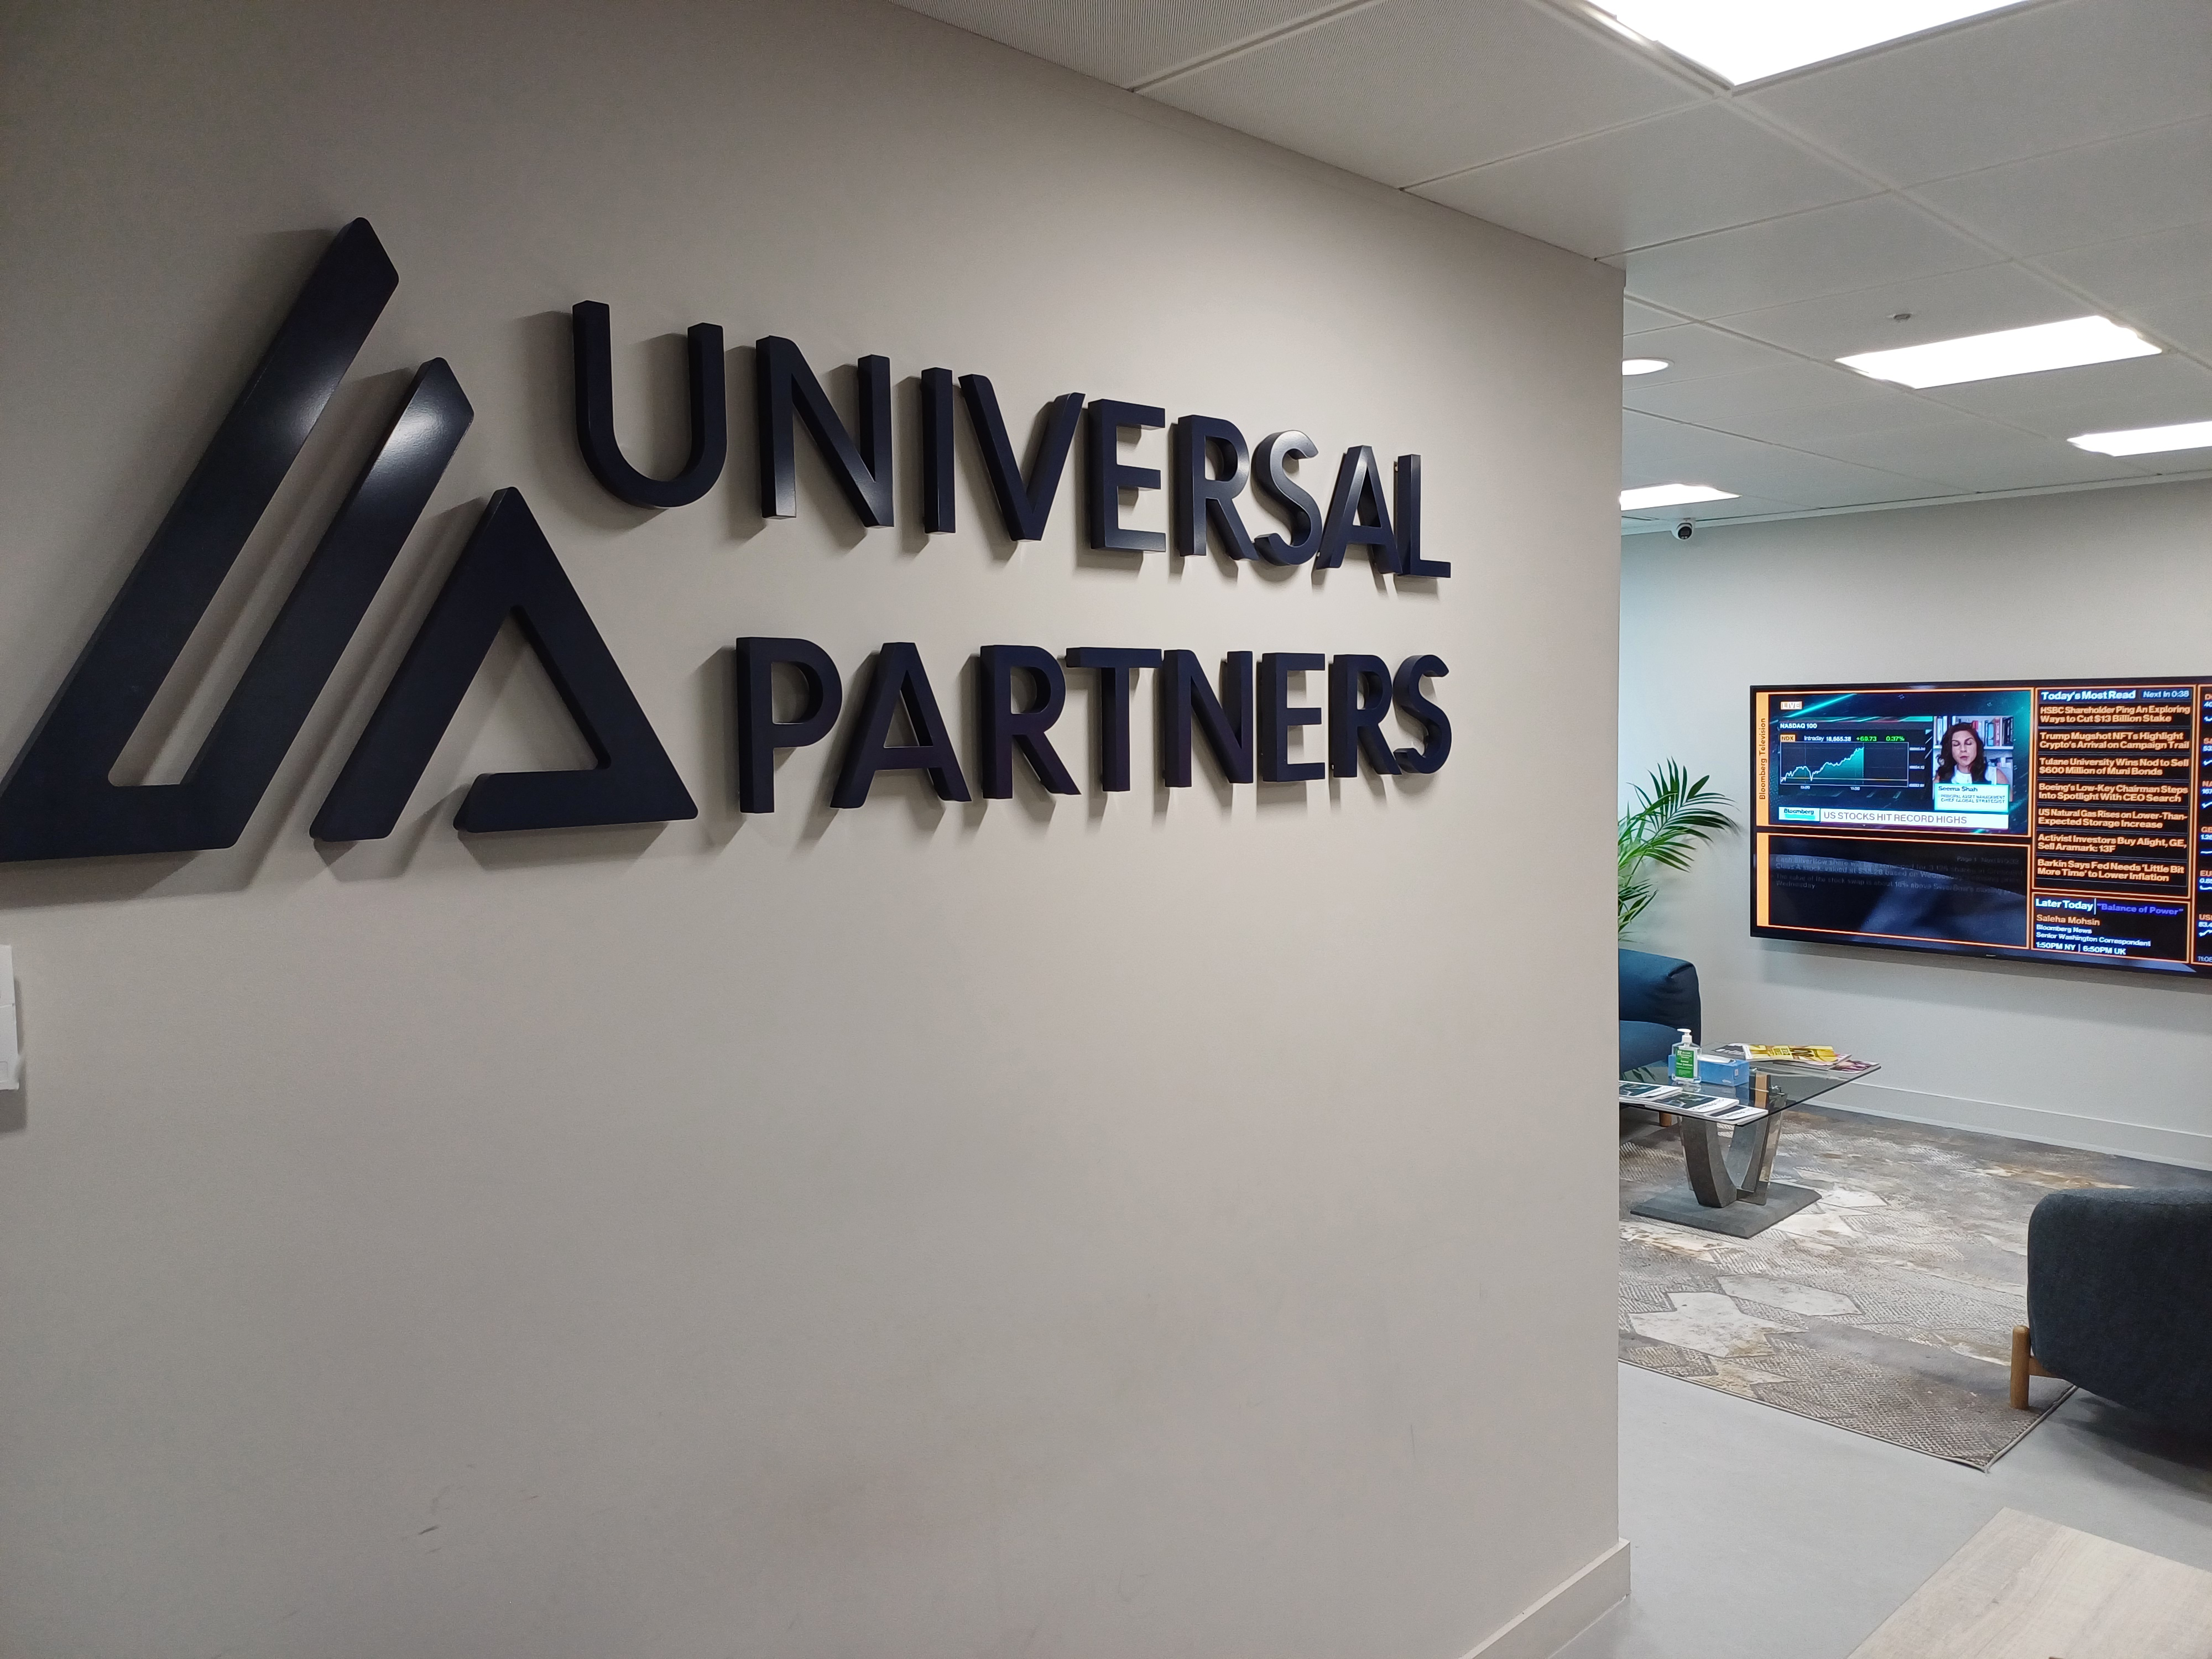 Universal Partners are a key partner to E2E